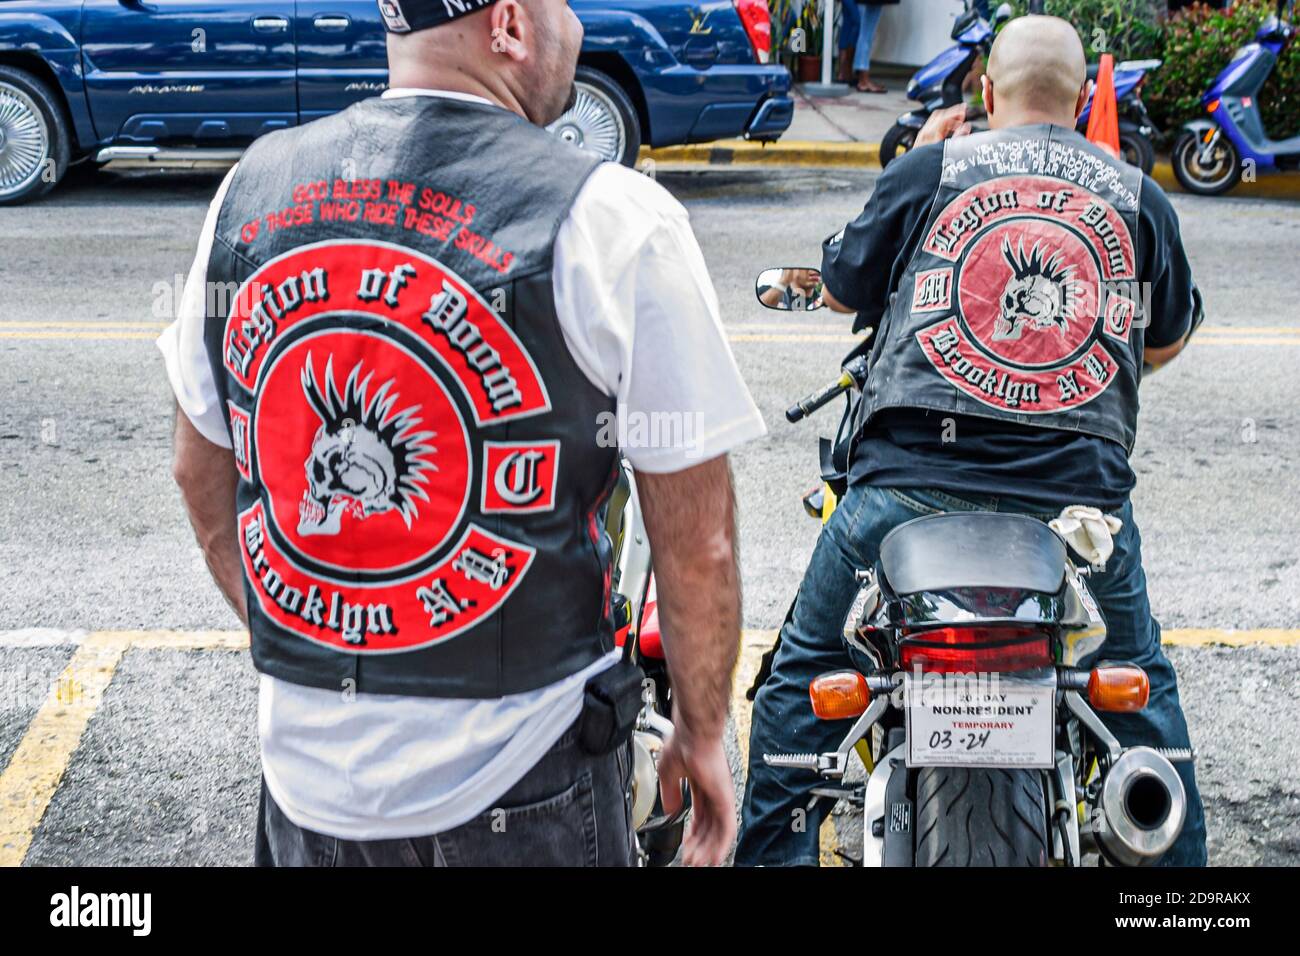 Miami Beach Florida,Ocean Drive,Legion of Doom motorcycle gang group Brooklyn New York,member wears wearing vest, Stock Photo